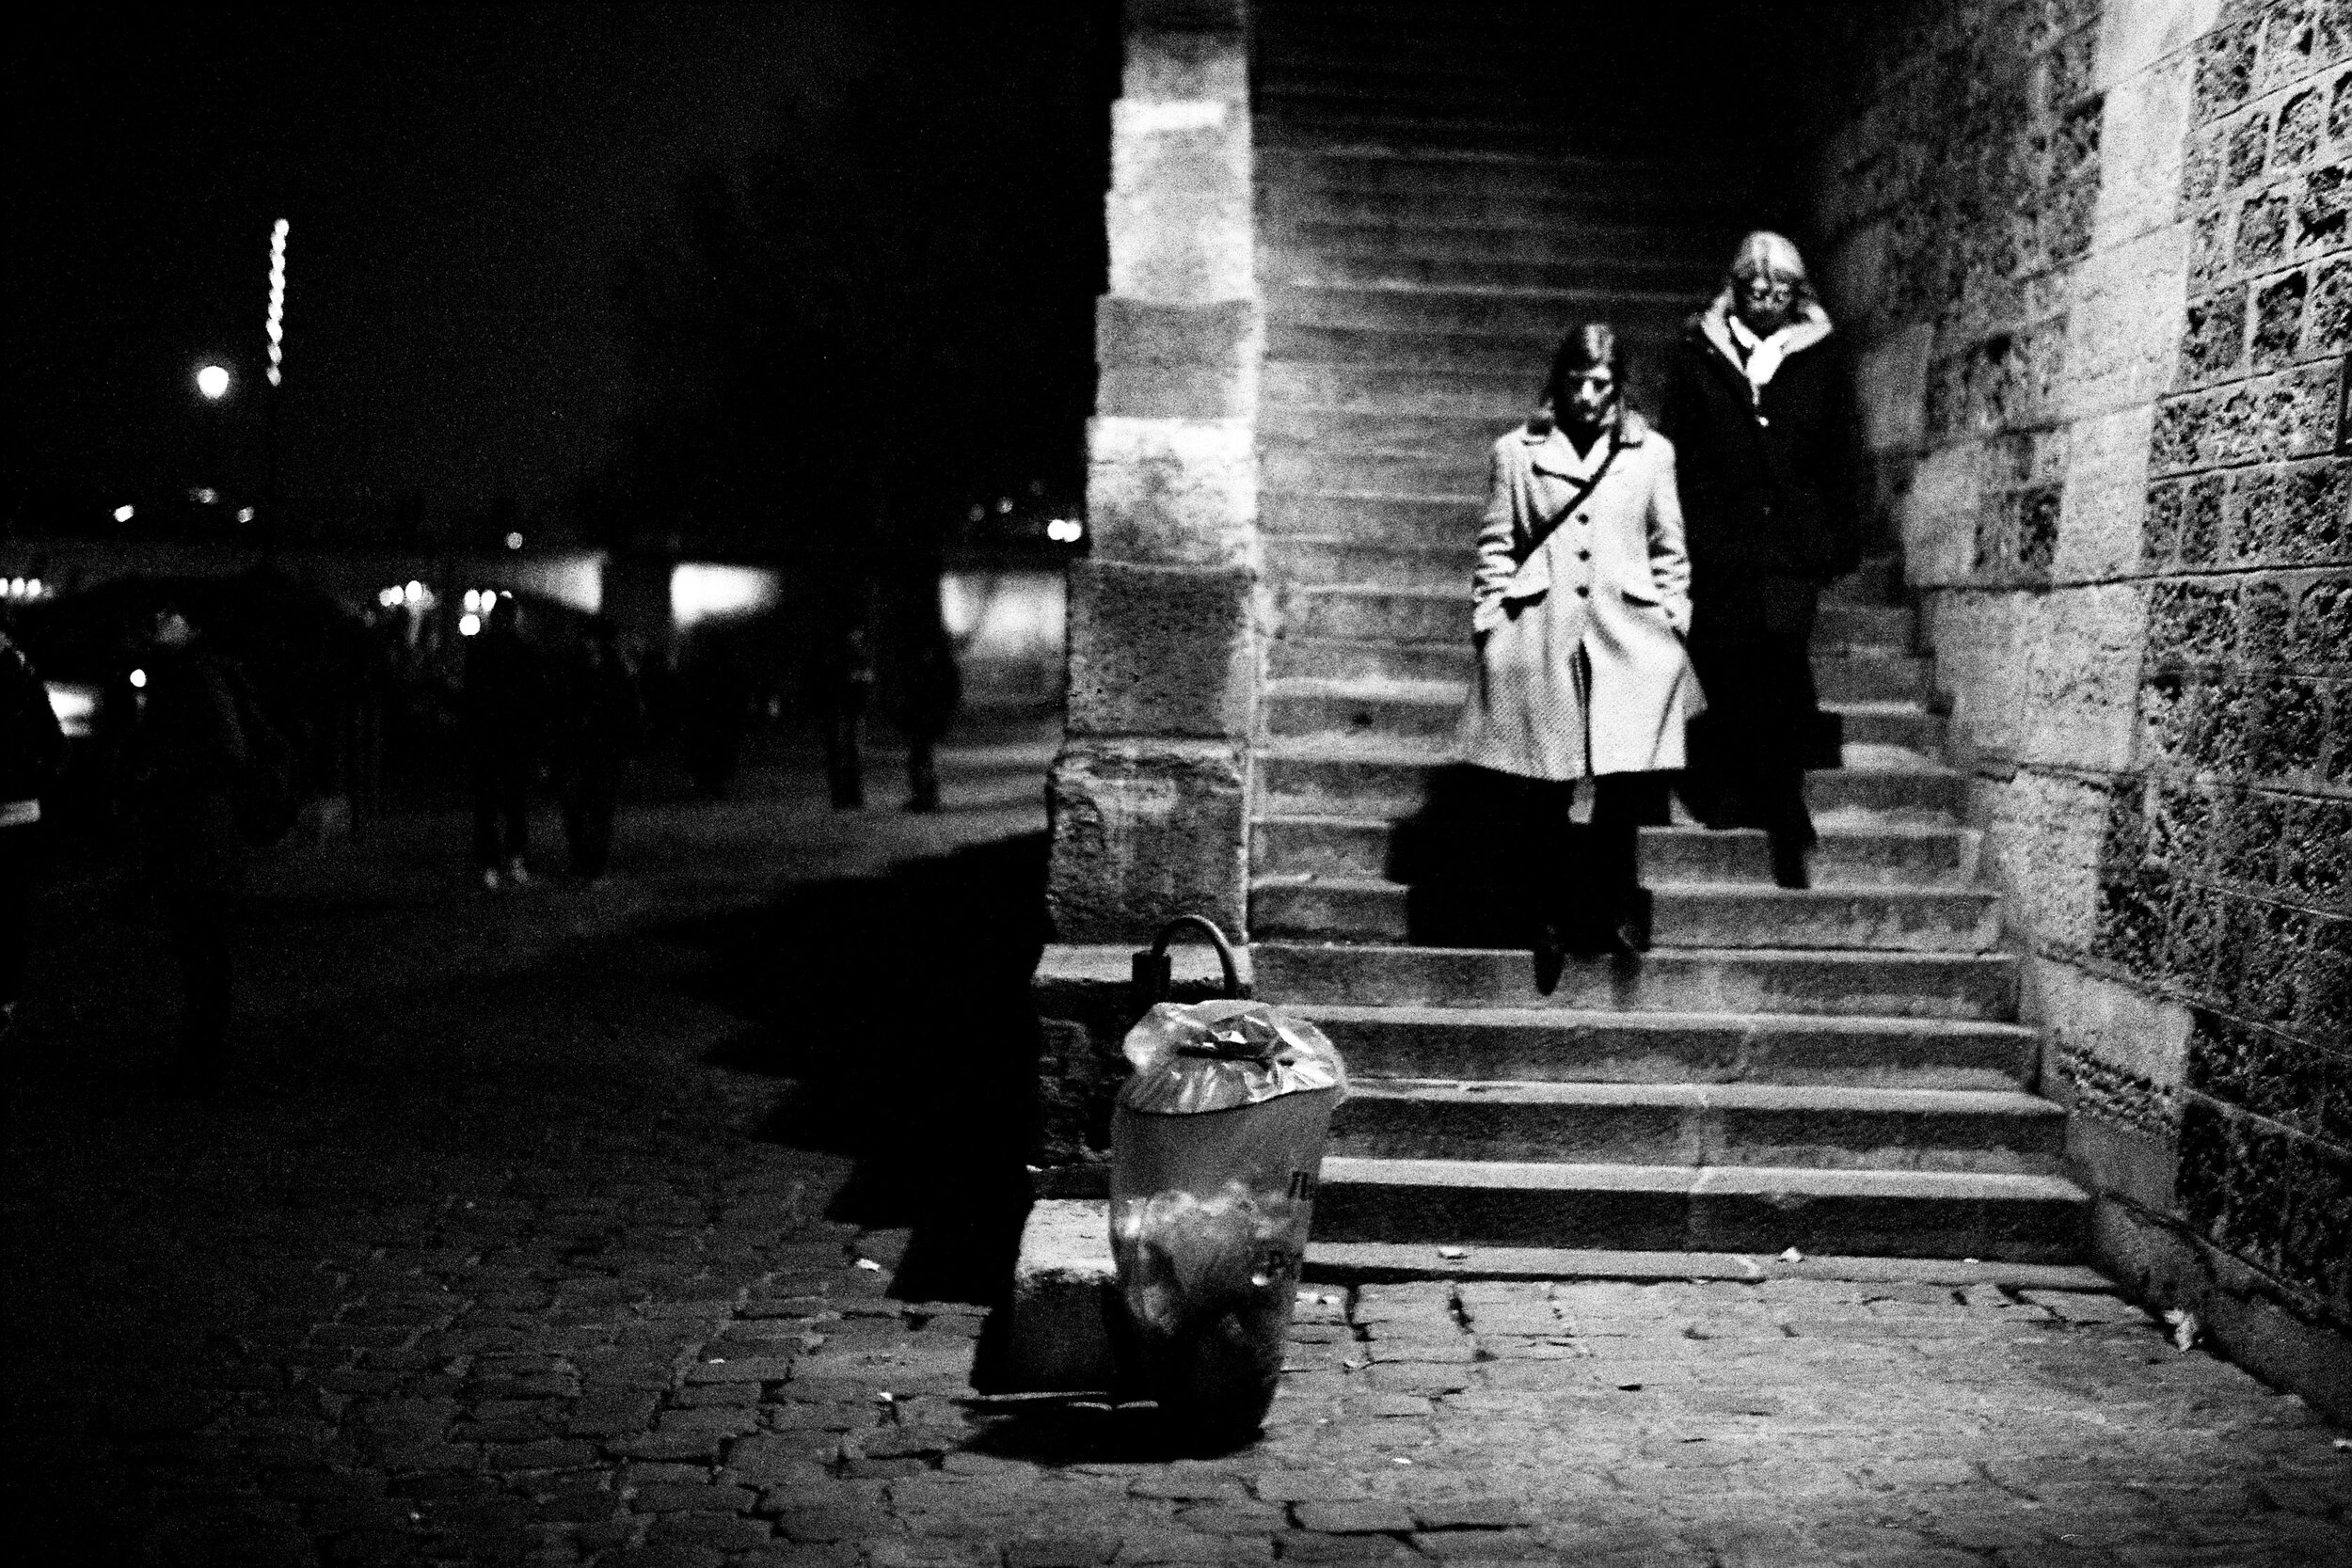 013_Winter_Eclipse_2008_Essai-photographique-photographie-documentaire-Marianne-Charland-02.jpg